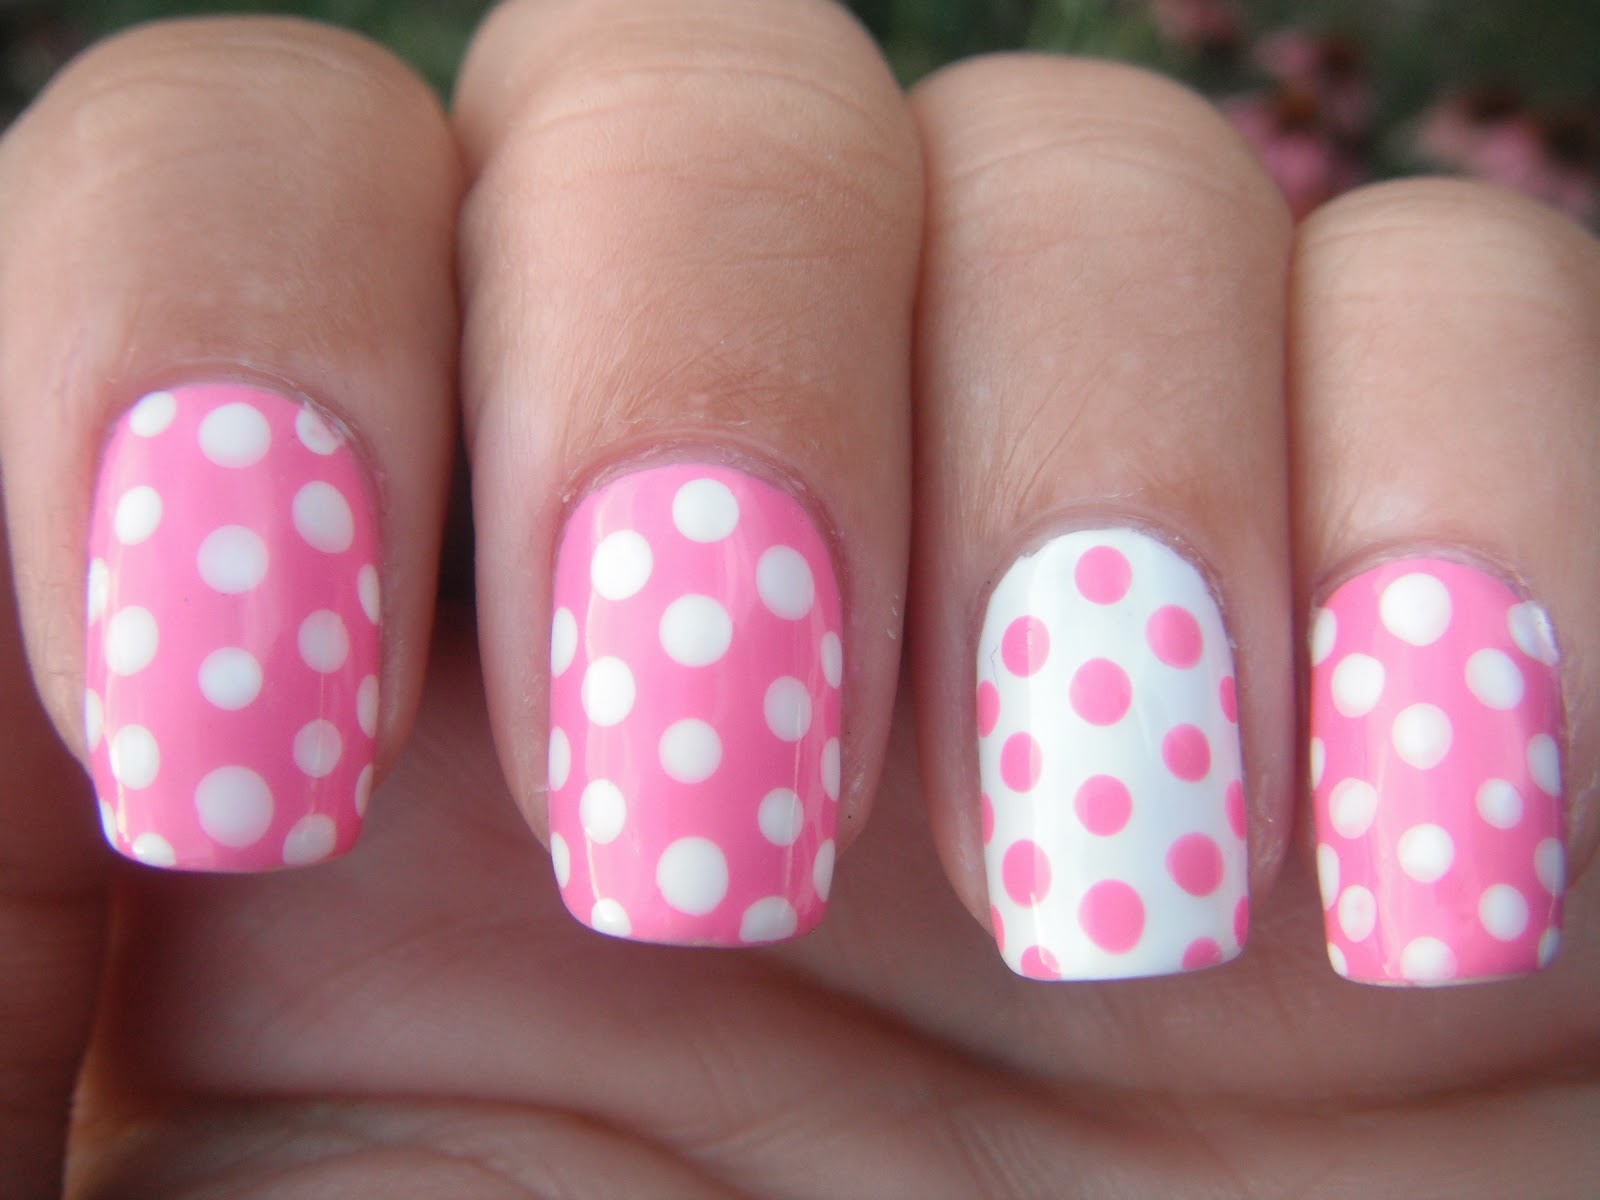 3. Burgundy and white polka dot nail design - wide 1